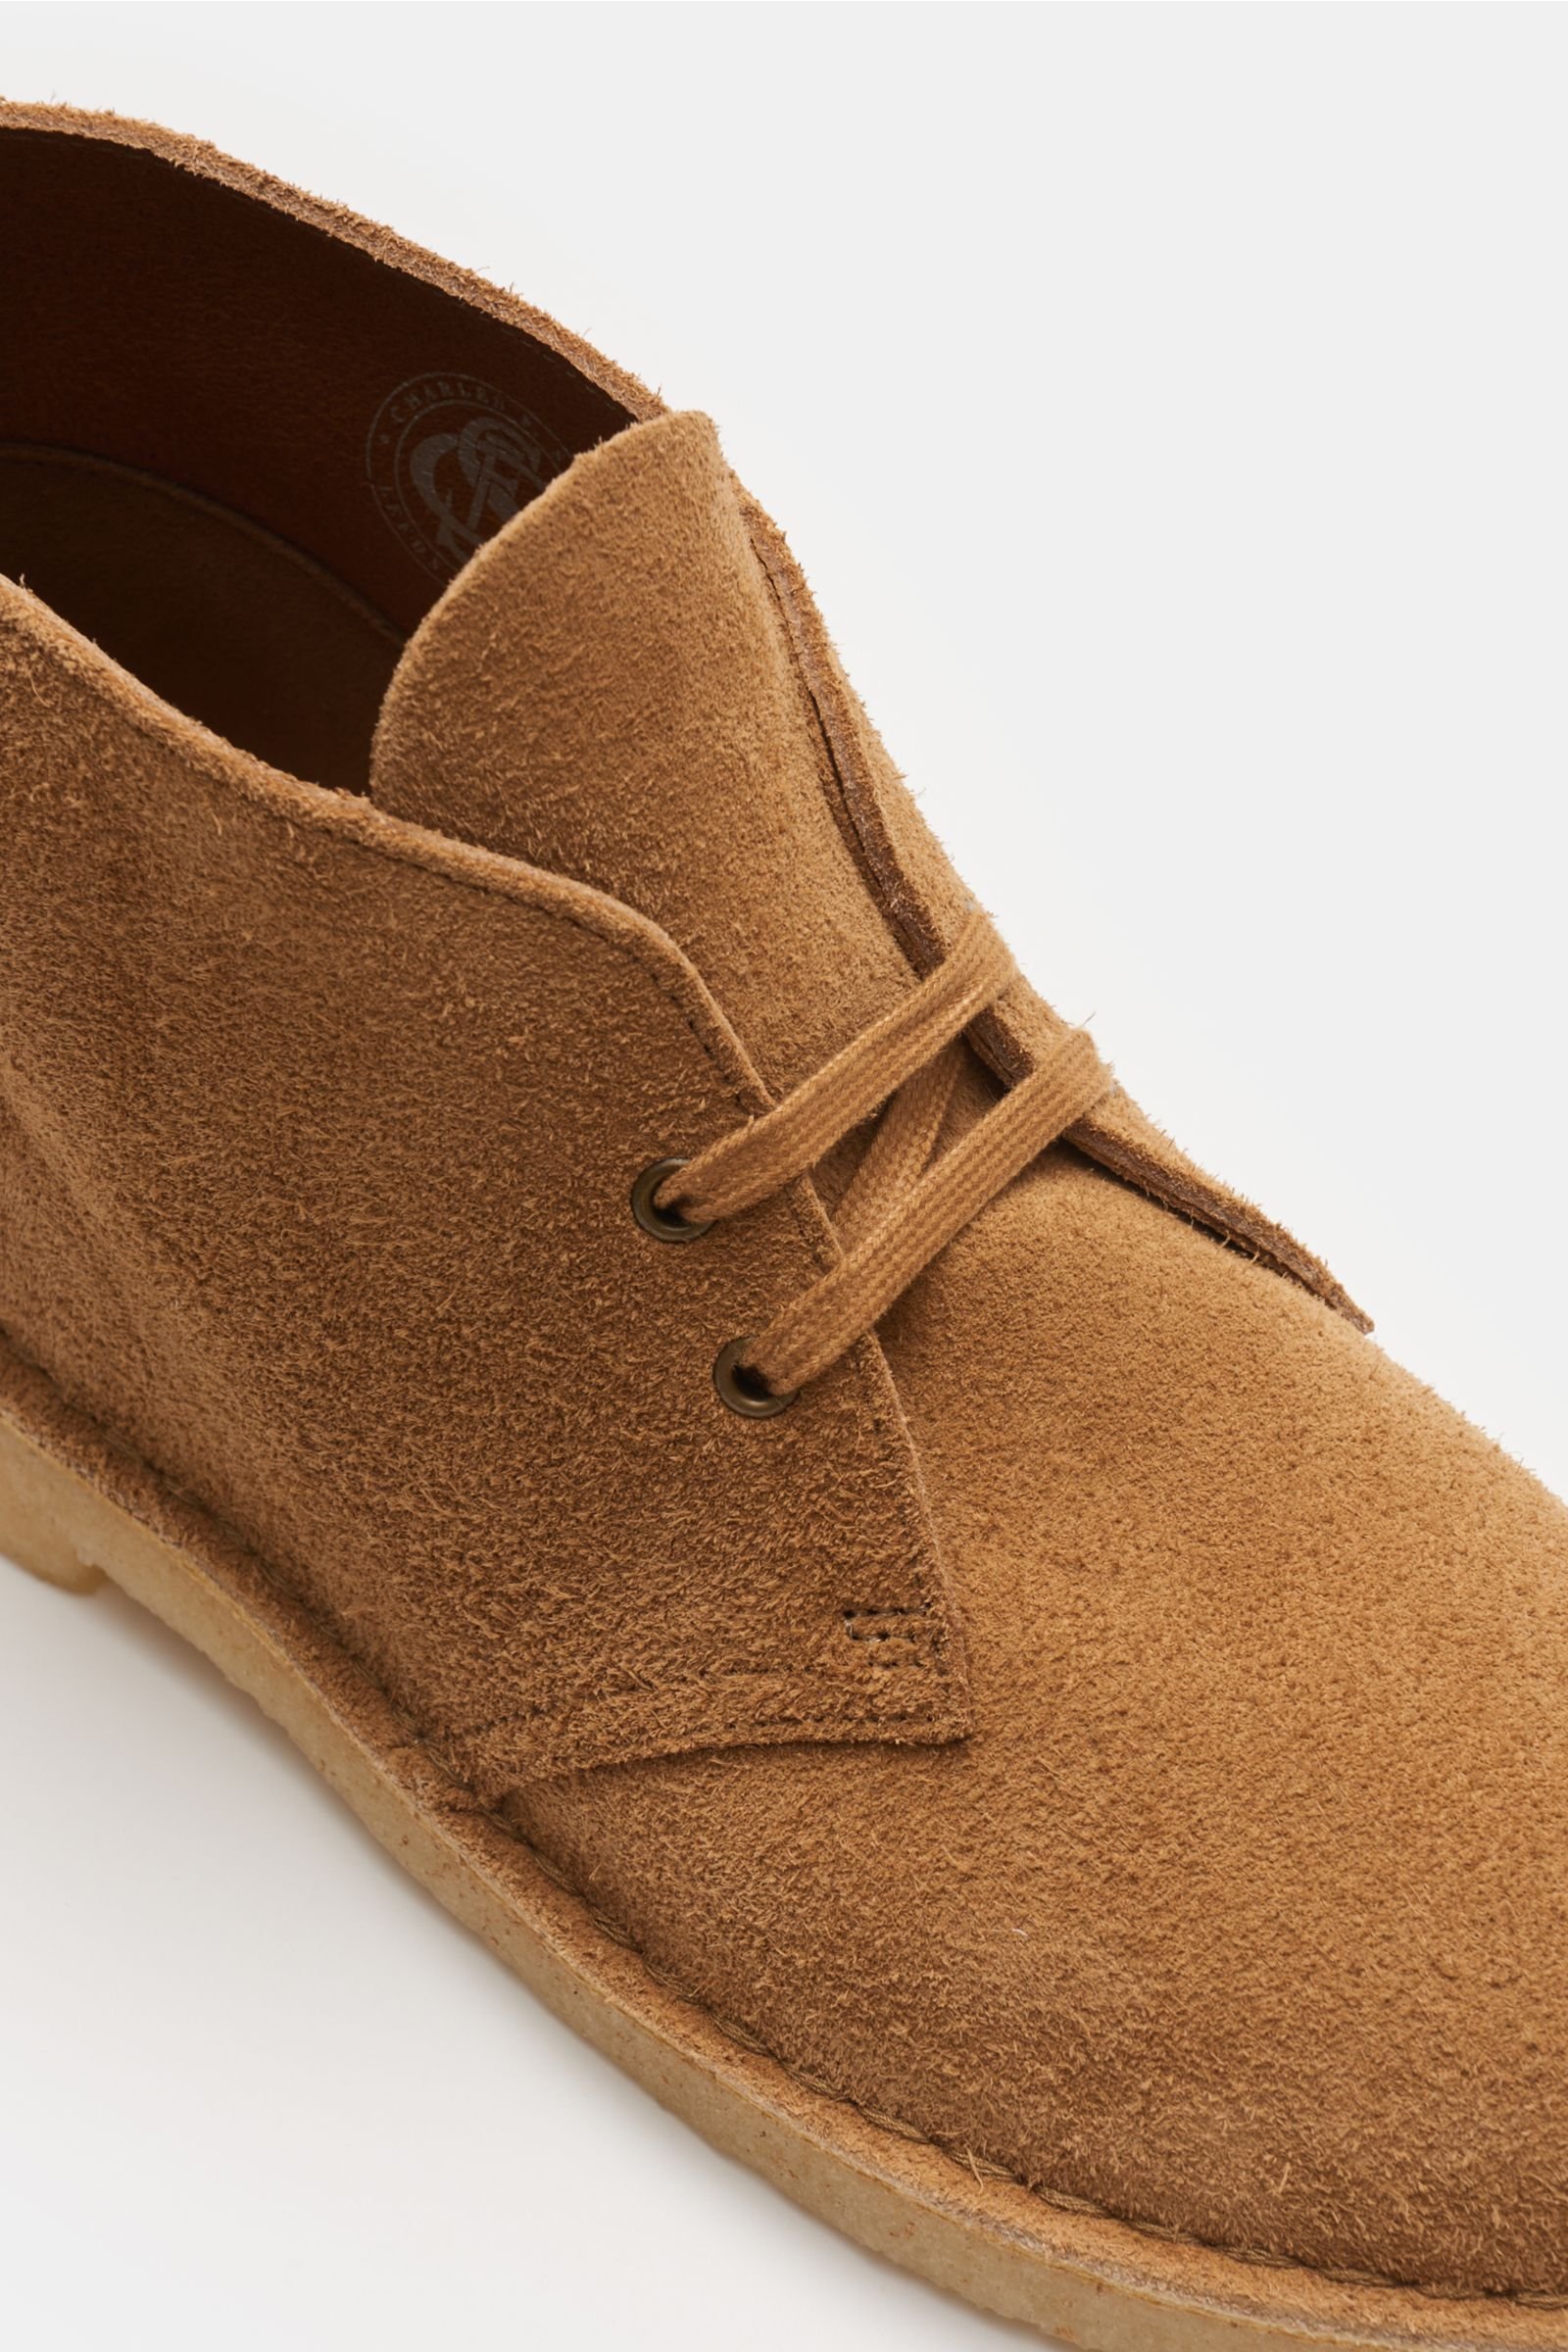 clarks originals brown desert boots